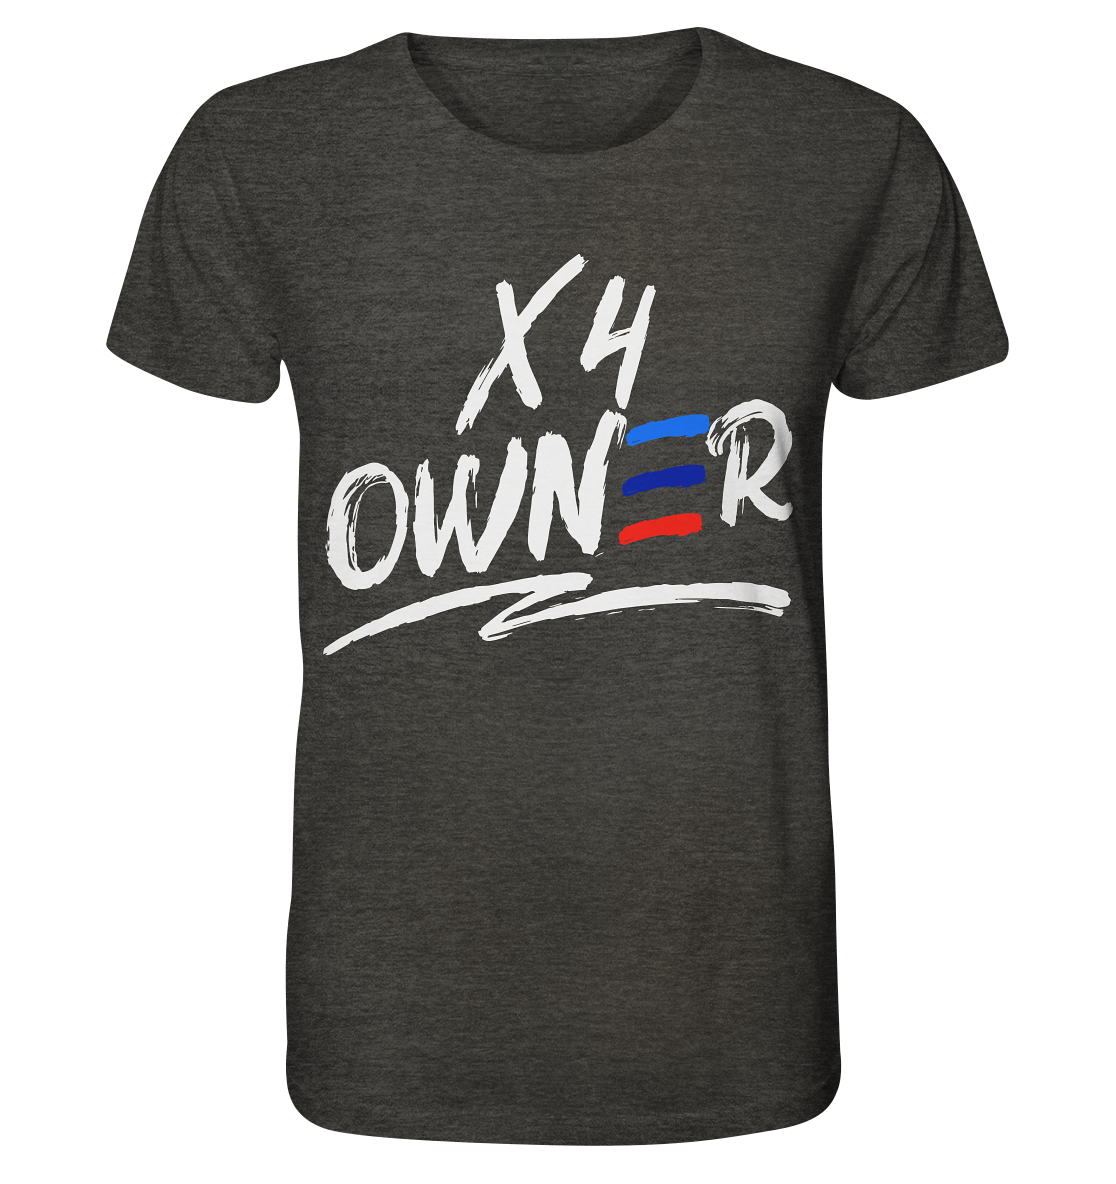 COD_BGKX4OWNER - Organic Shirt (meliert)